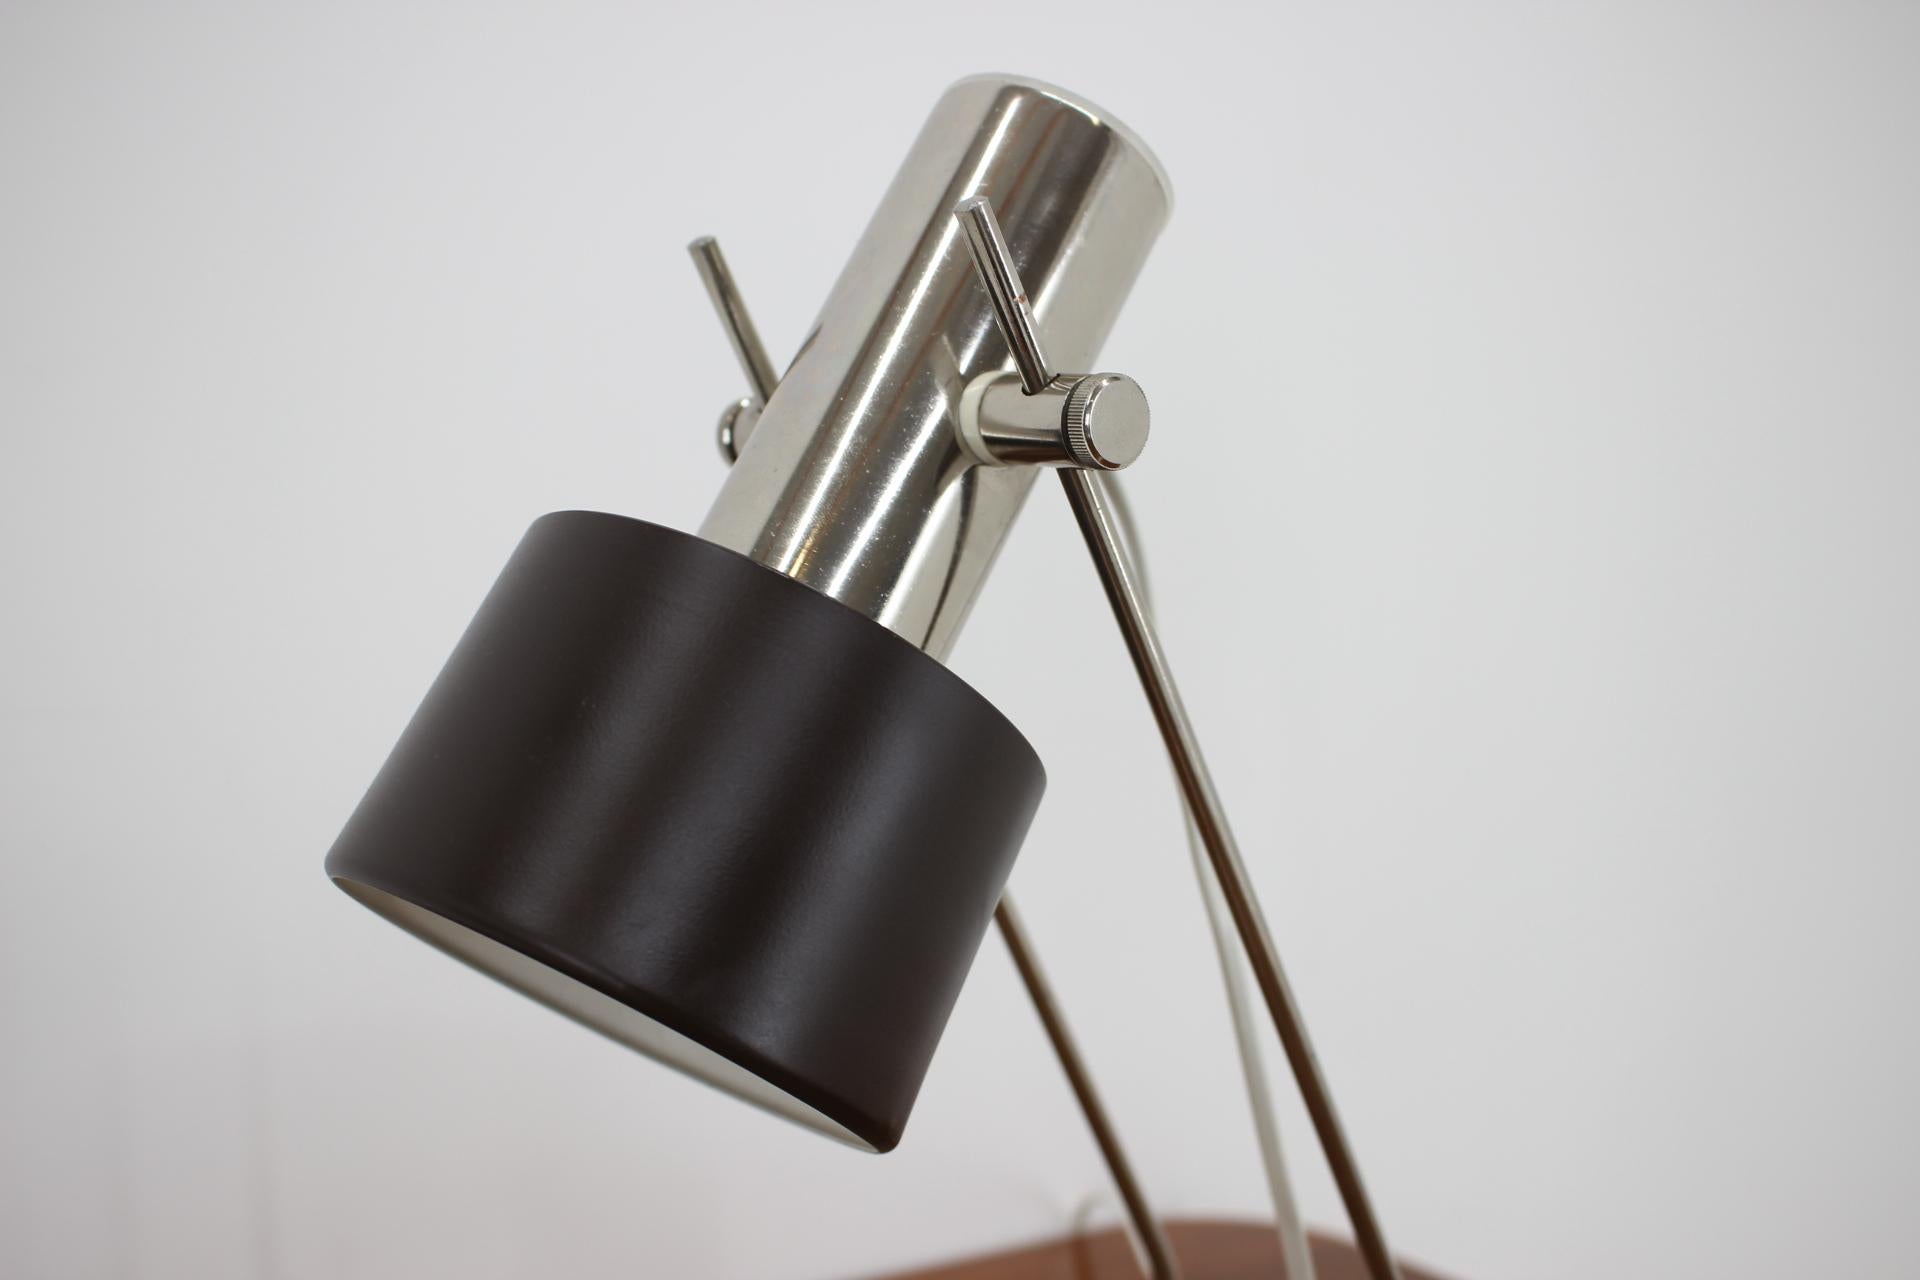 Czech Midcentury Design Adjustable Table Lamp, 1970s For Sale